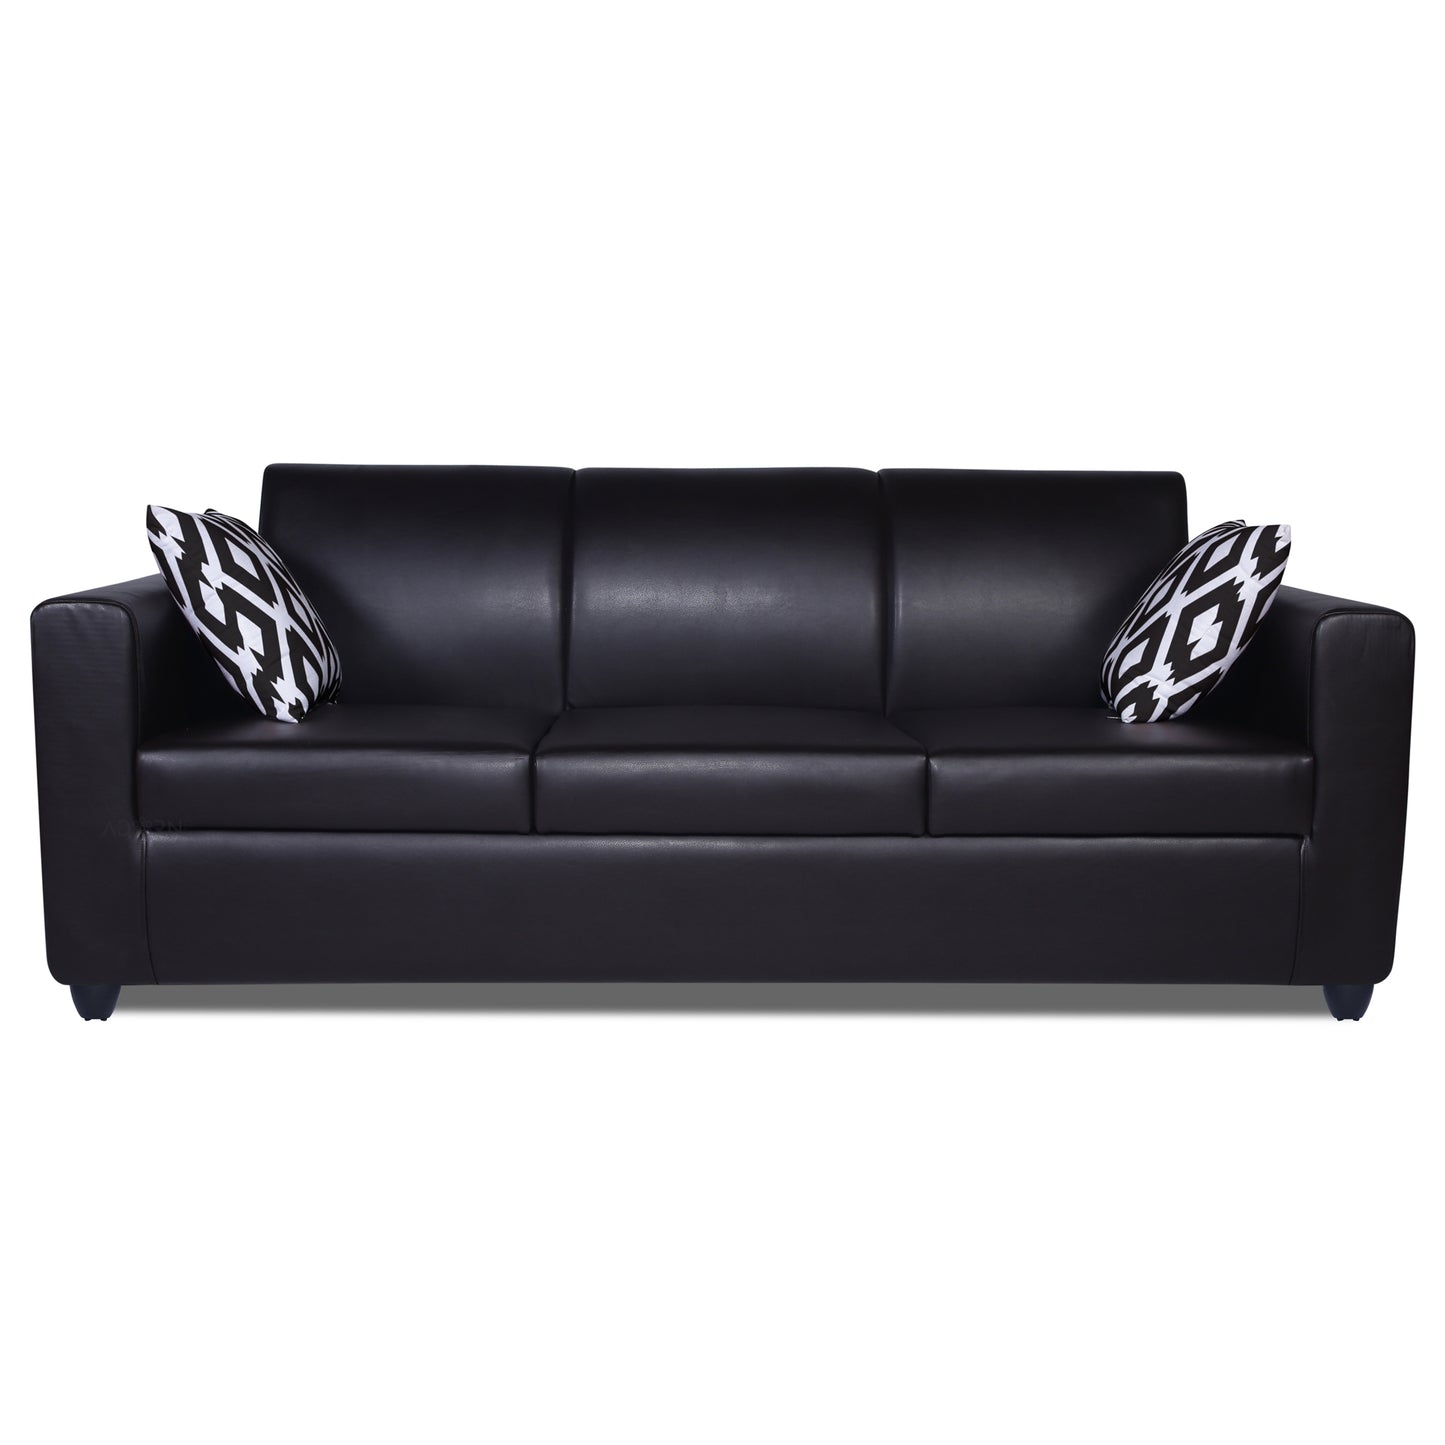 Adorn India Monteno Leatherette 3 Seater Sofa (Black)